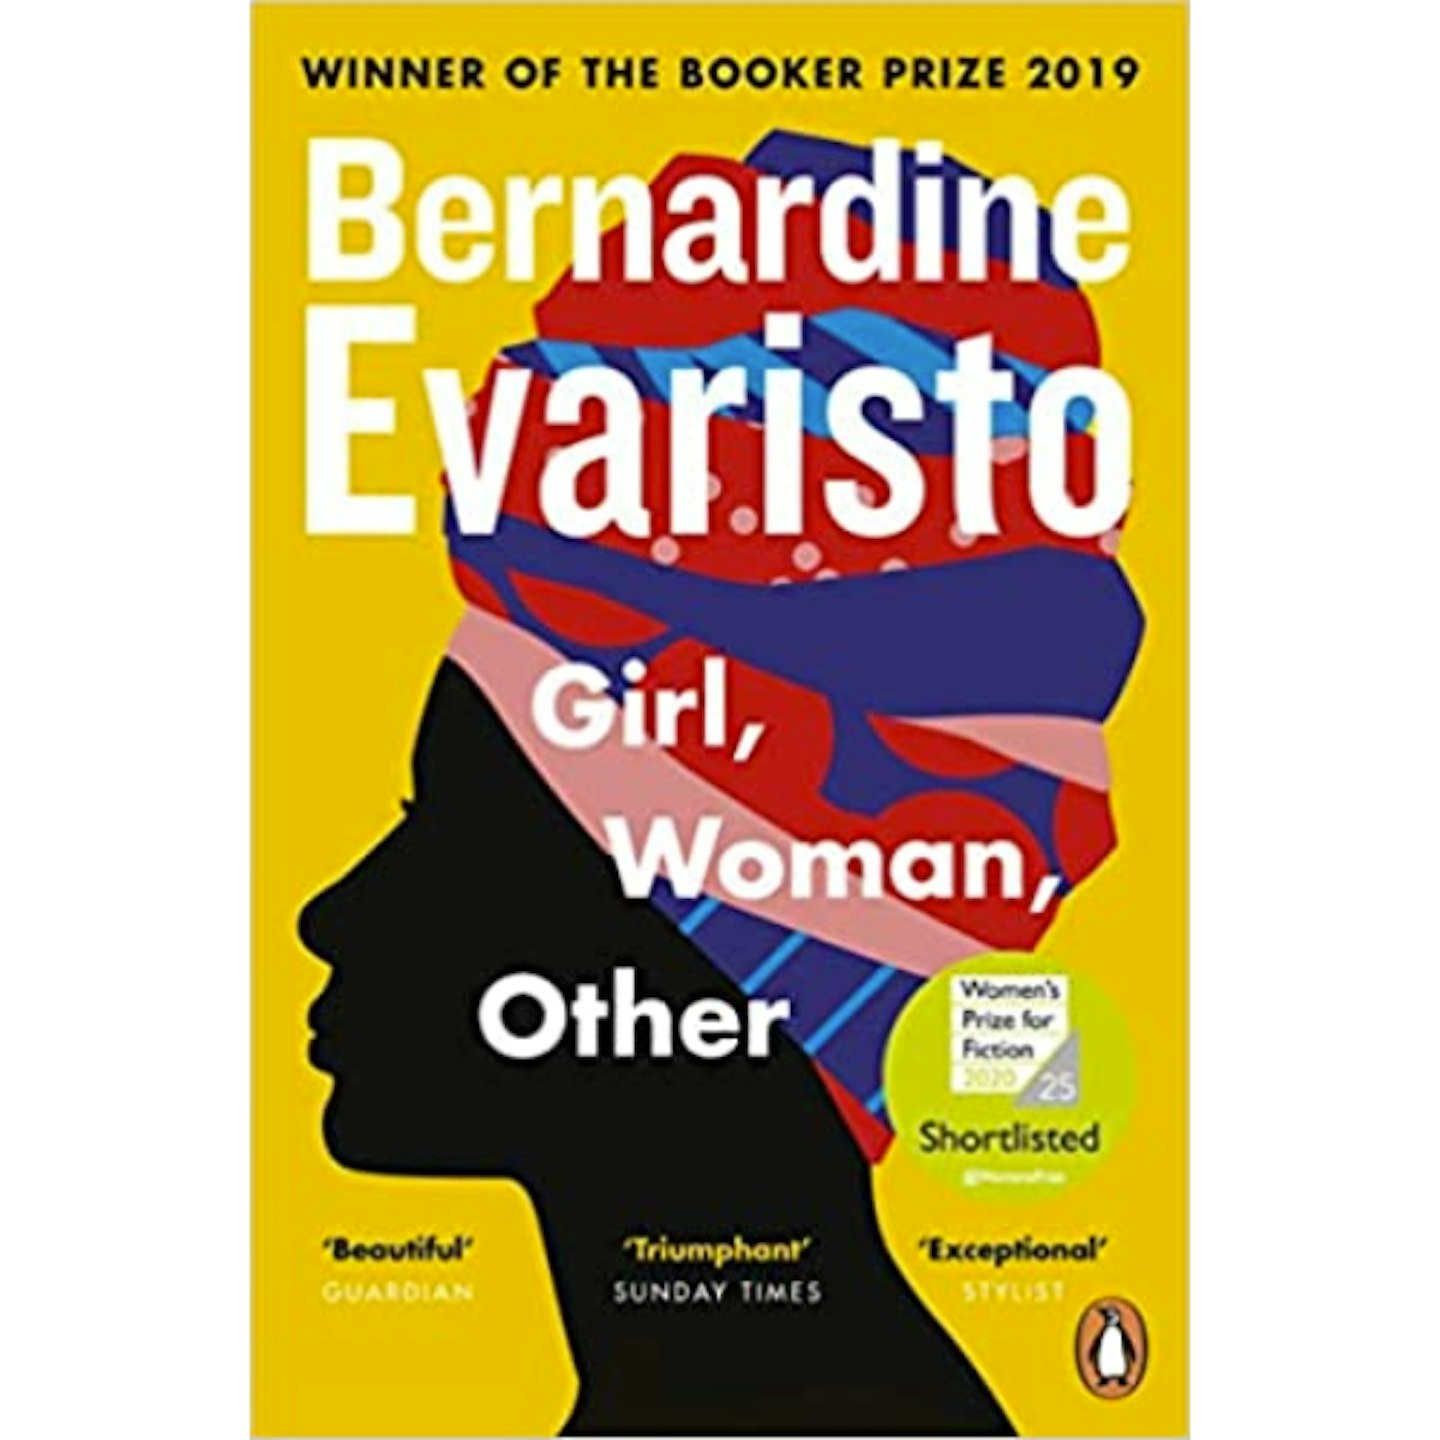 Girl, Woman, Other by Bernardine Evaristo  